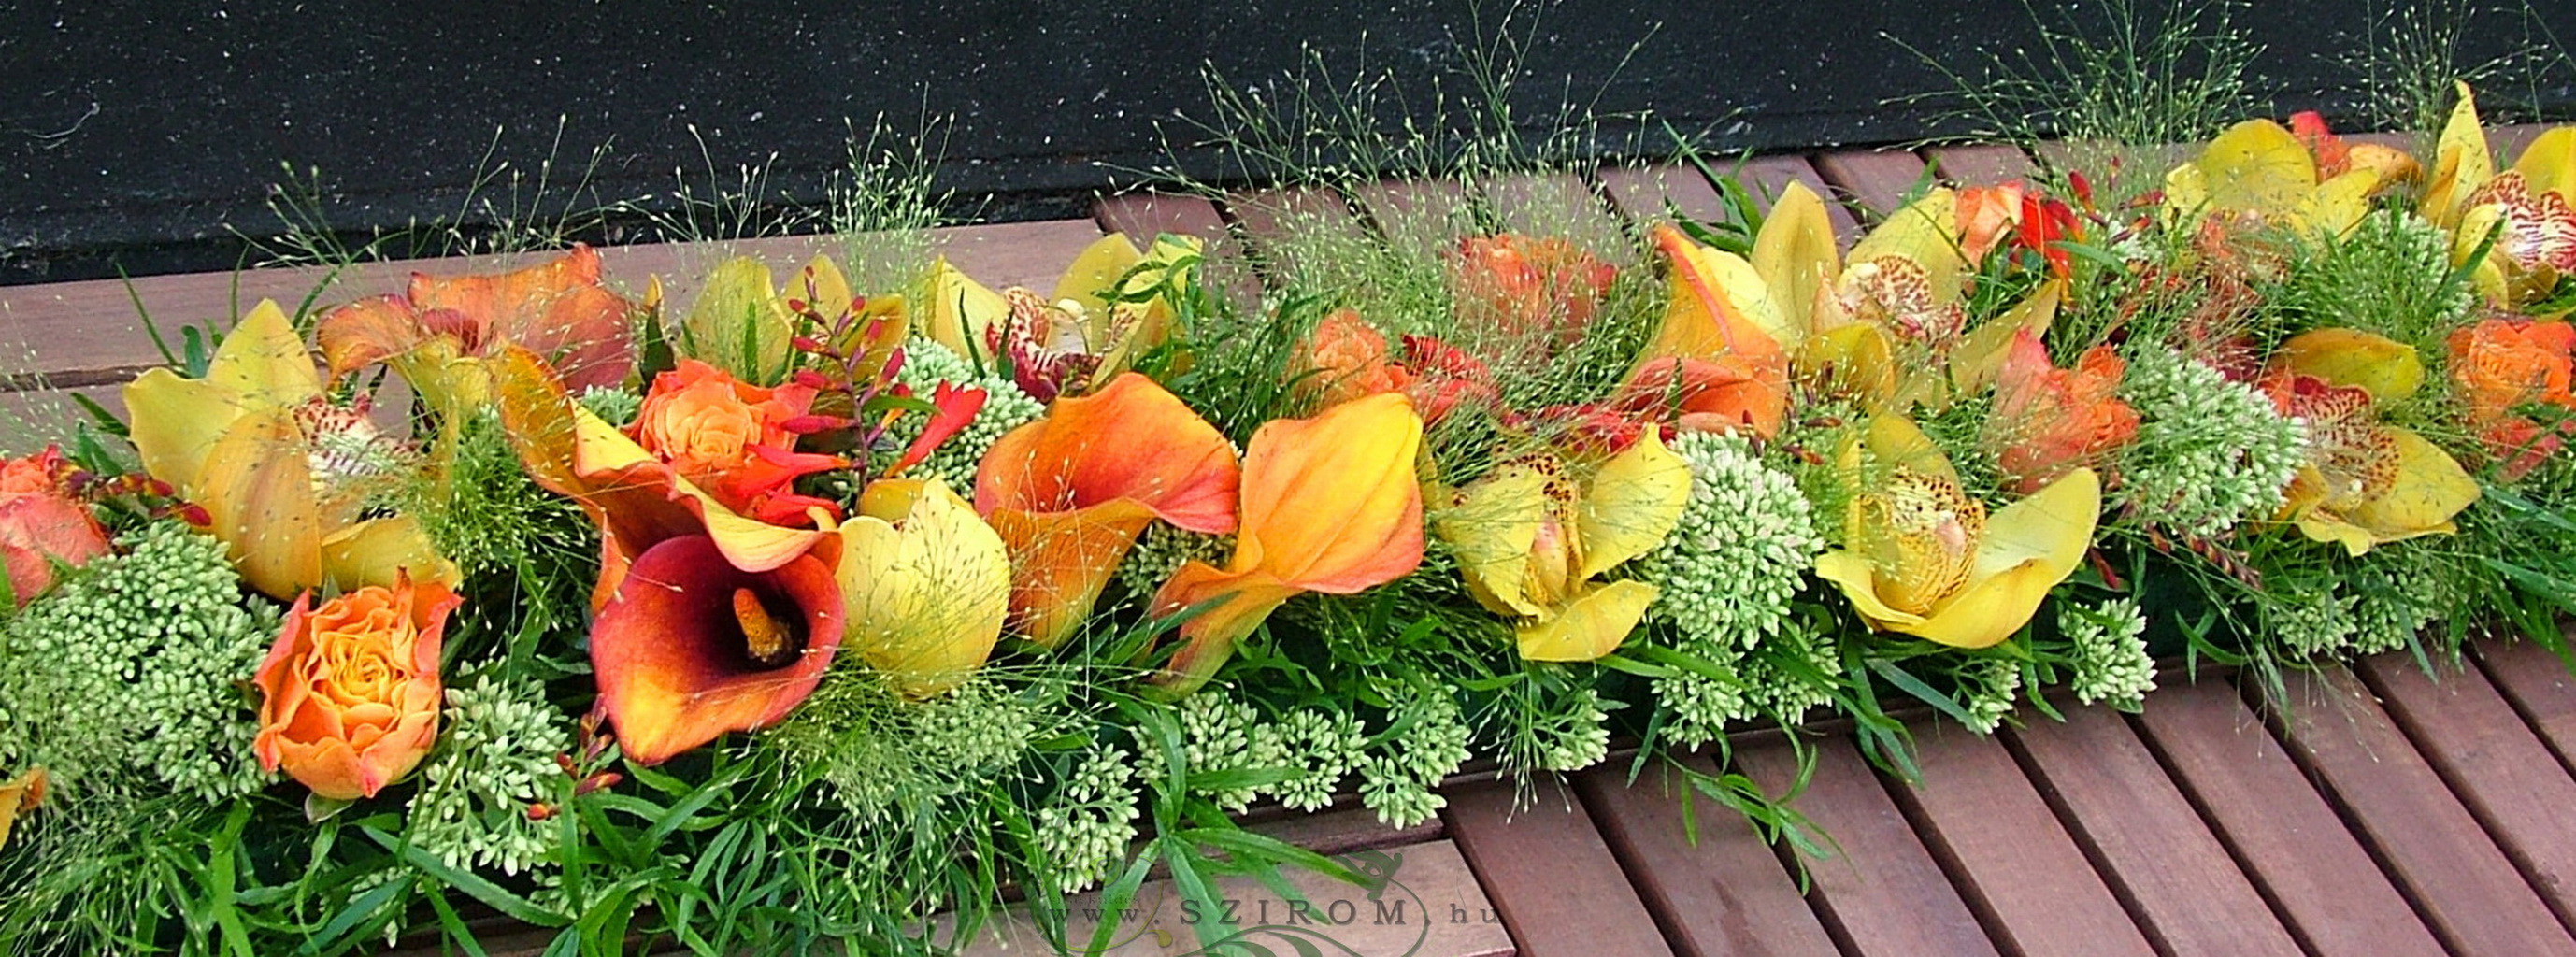 flower delivery Budapest - Main table centerpiece (calla, cymbidium, rose, crocosima, orange, yellow), wedding